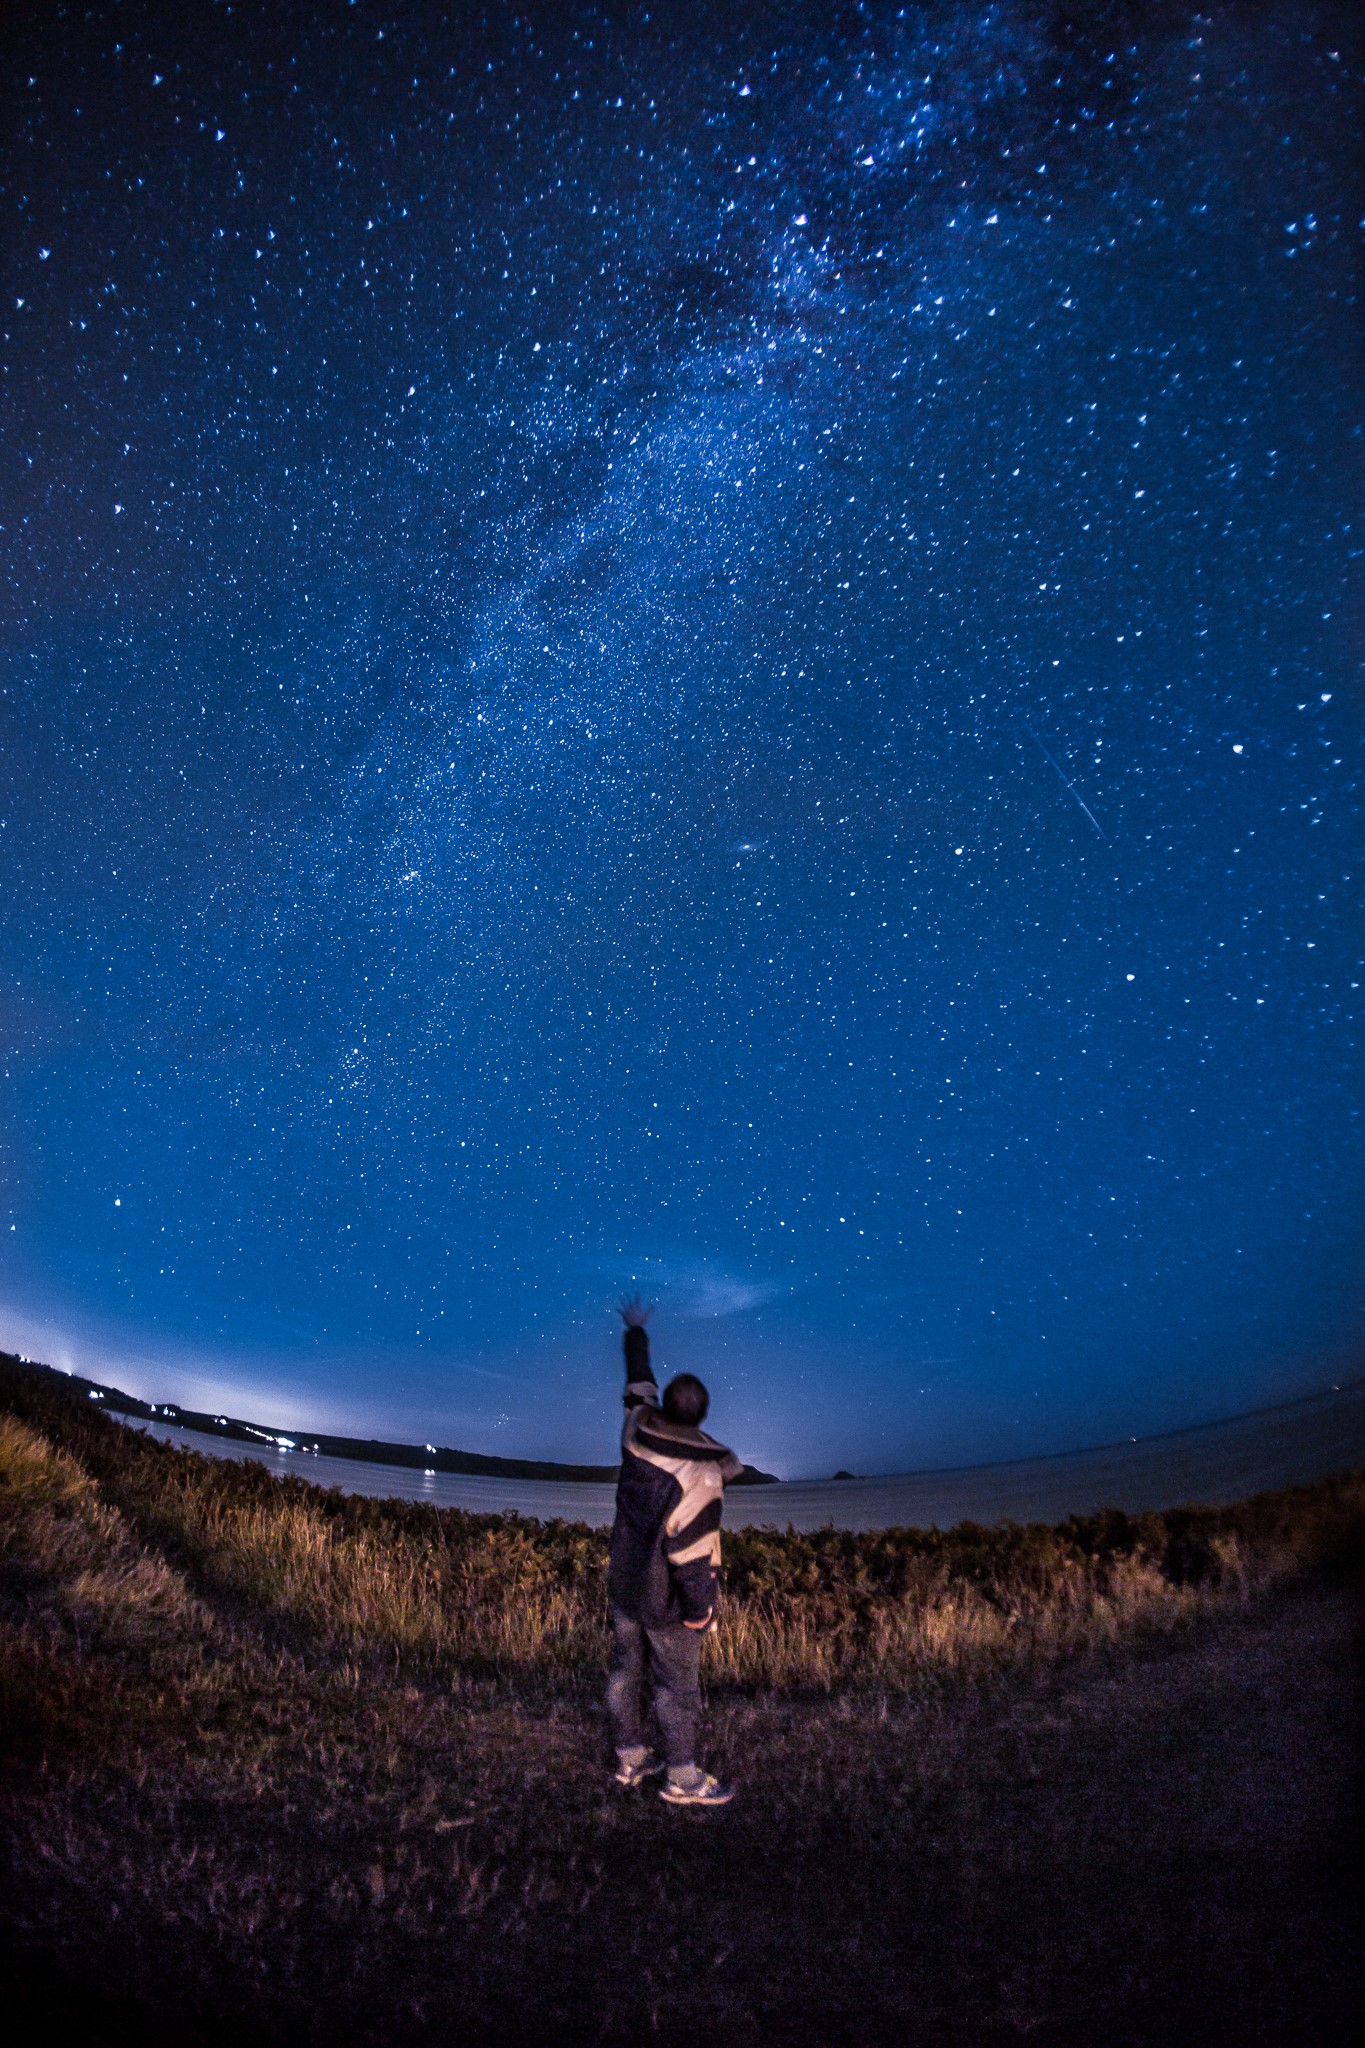 Man and child stargazing